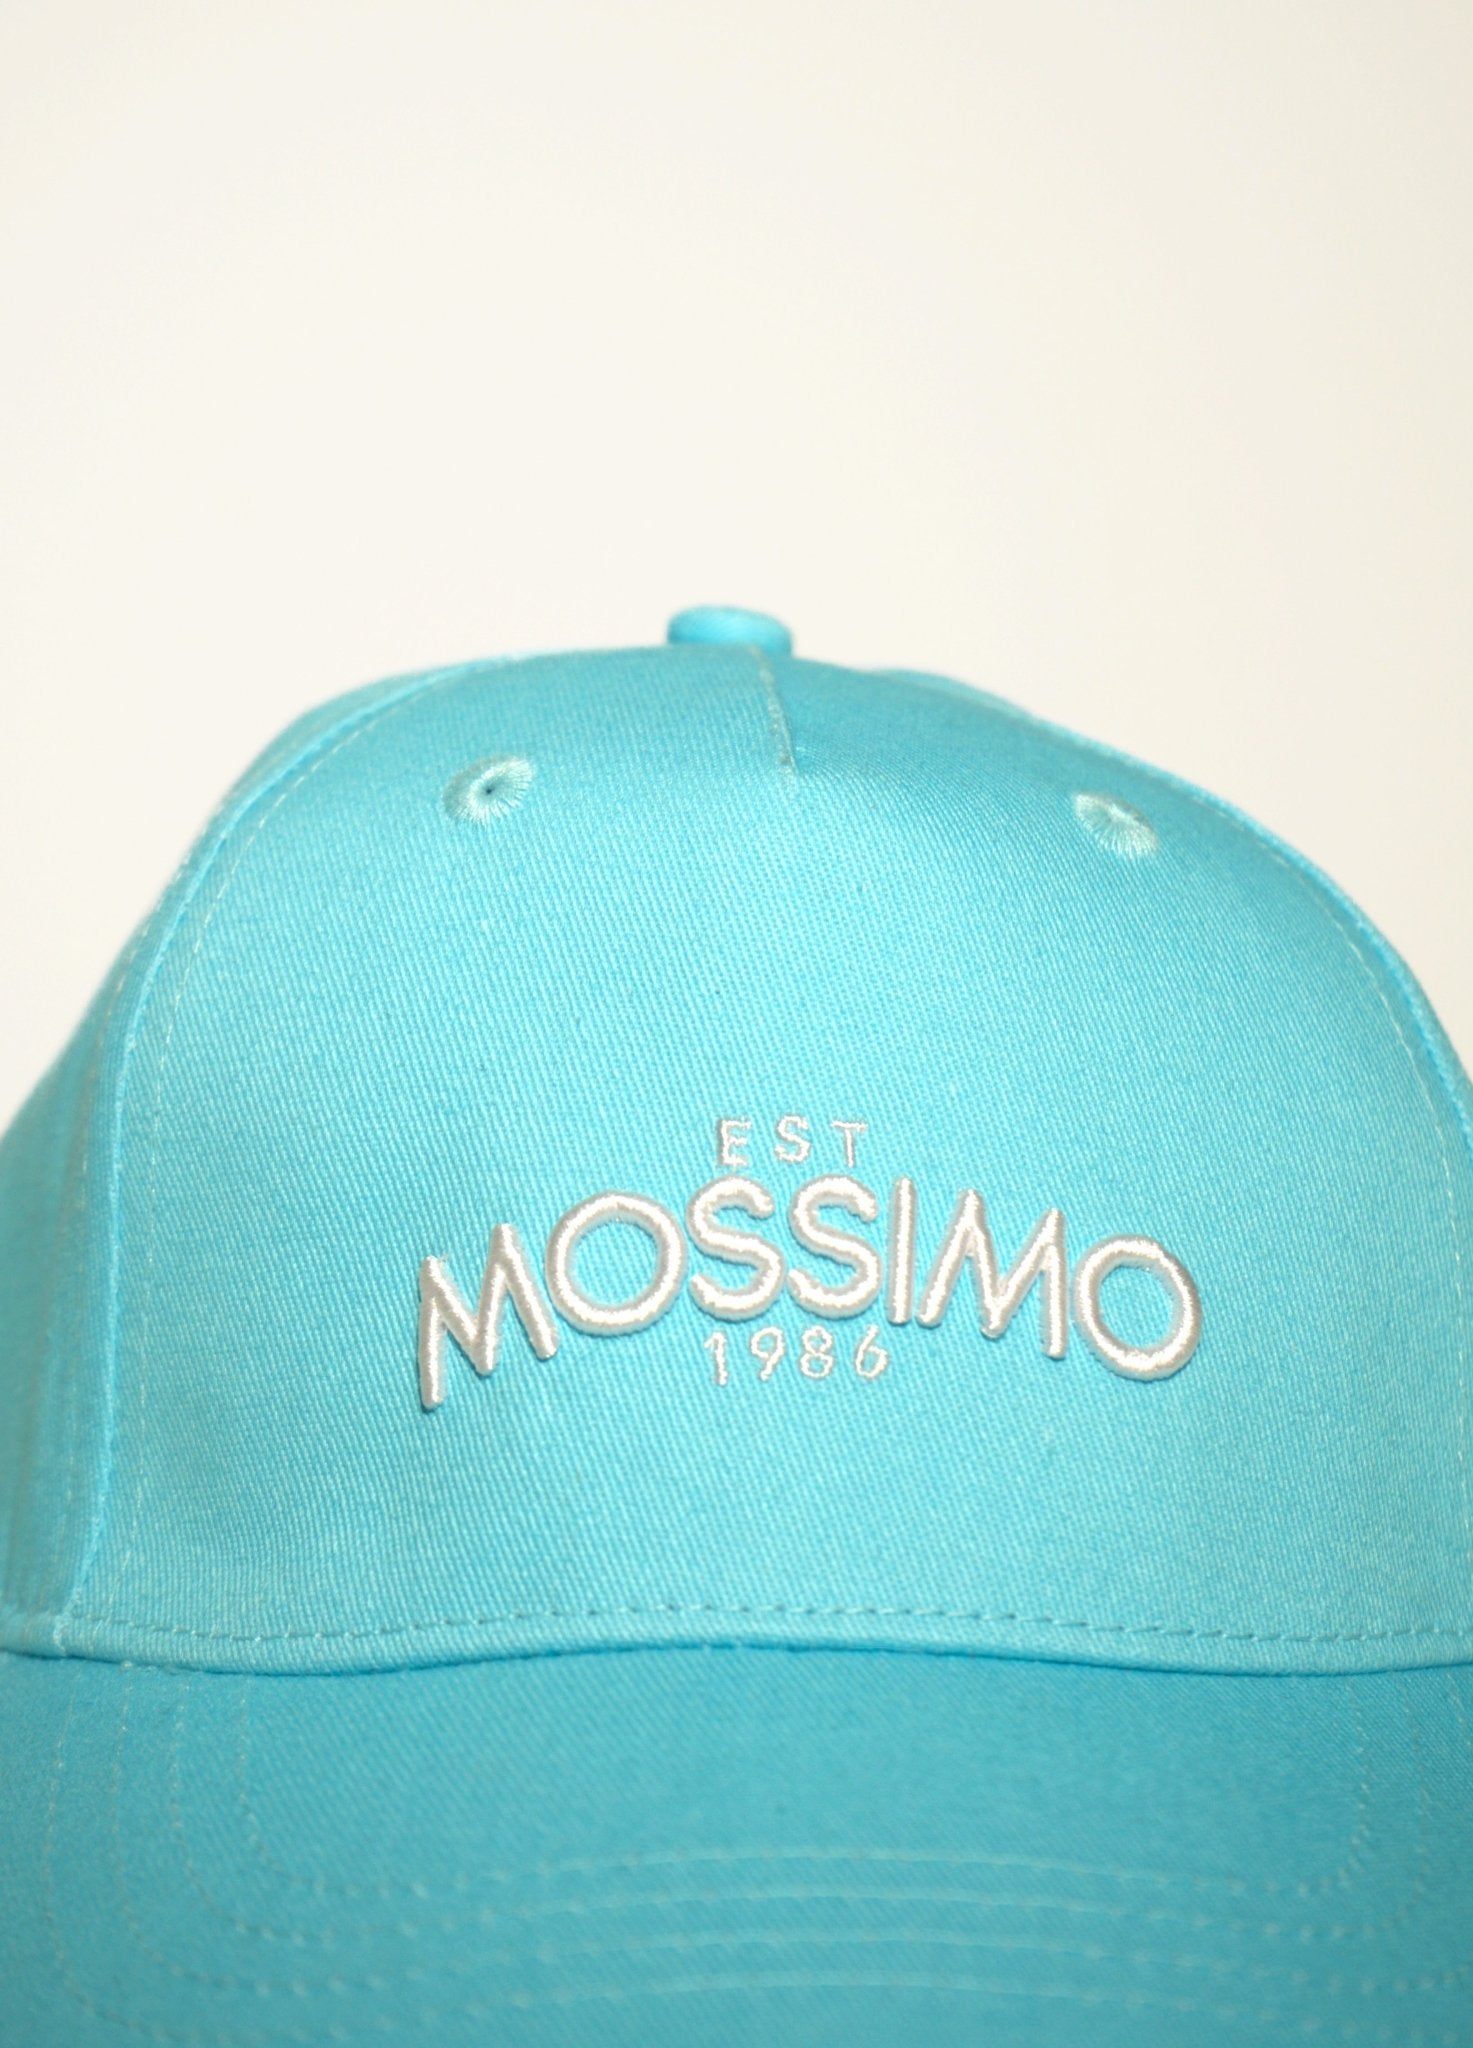 Mossimo Light Blue Embroidered Cap - Mossimo PH